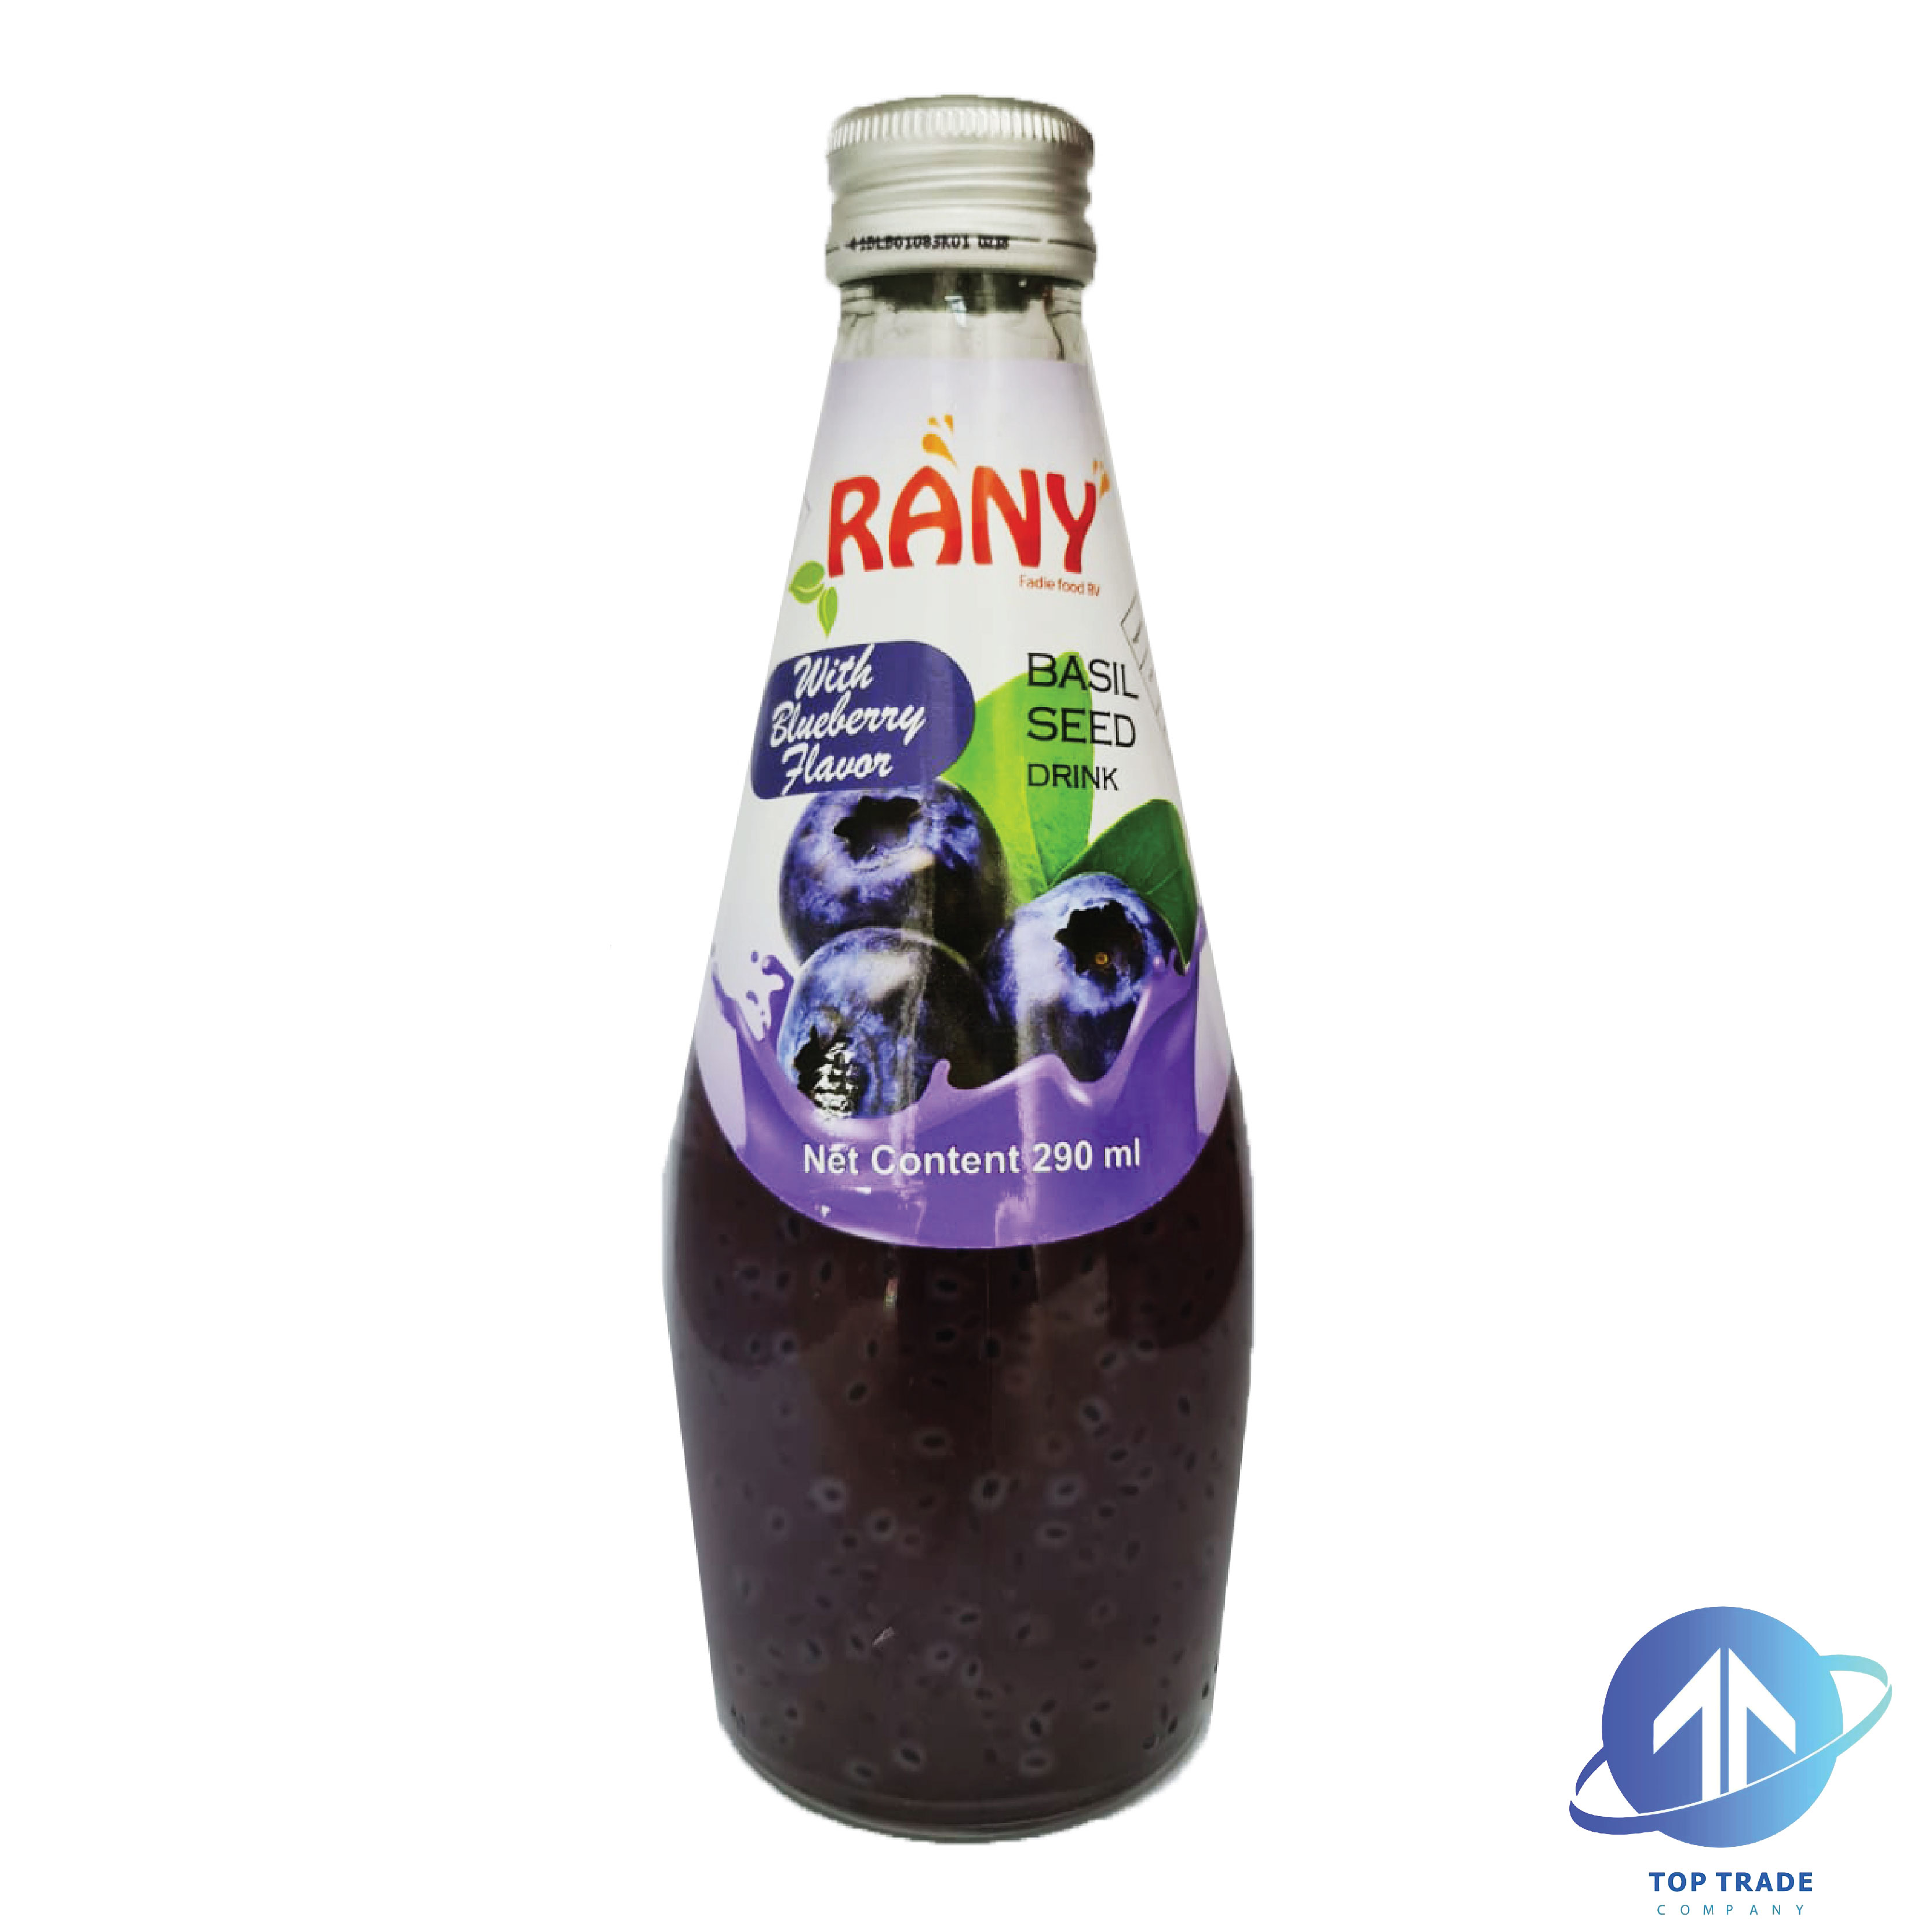 RANY Blueberry basil seed drink 290ML